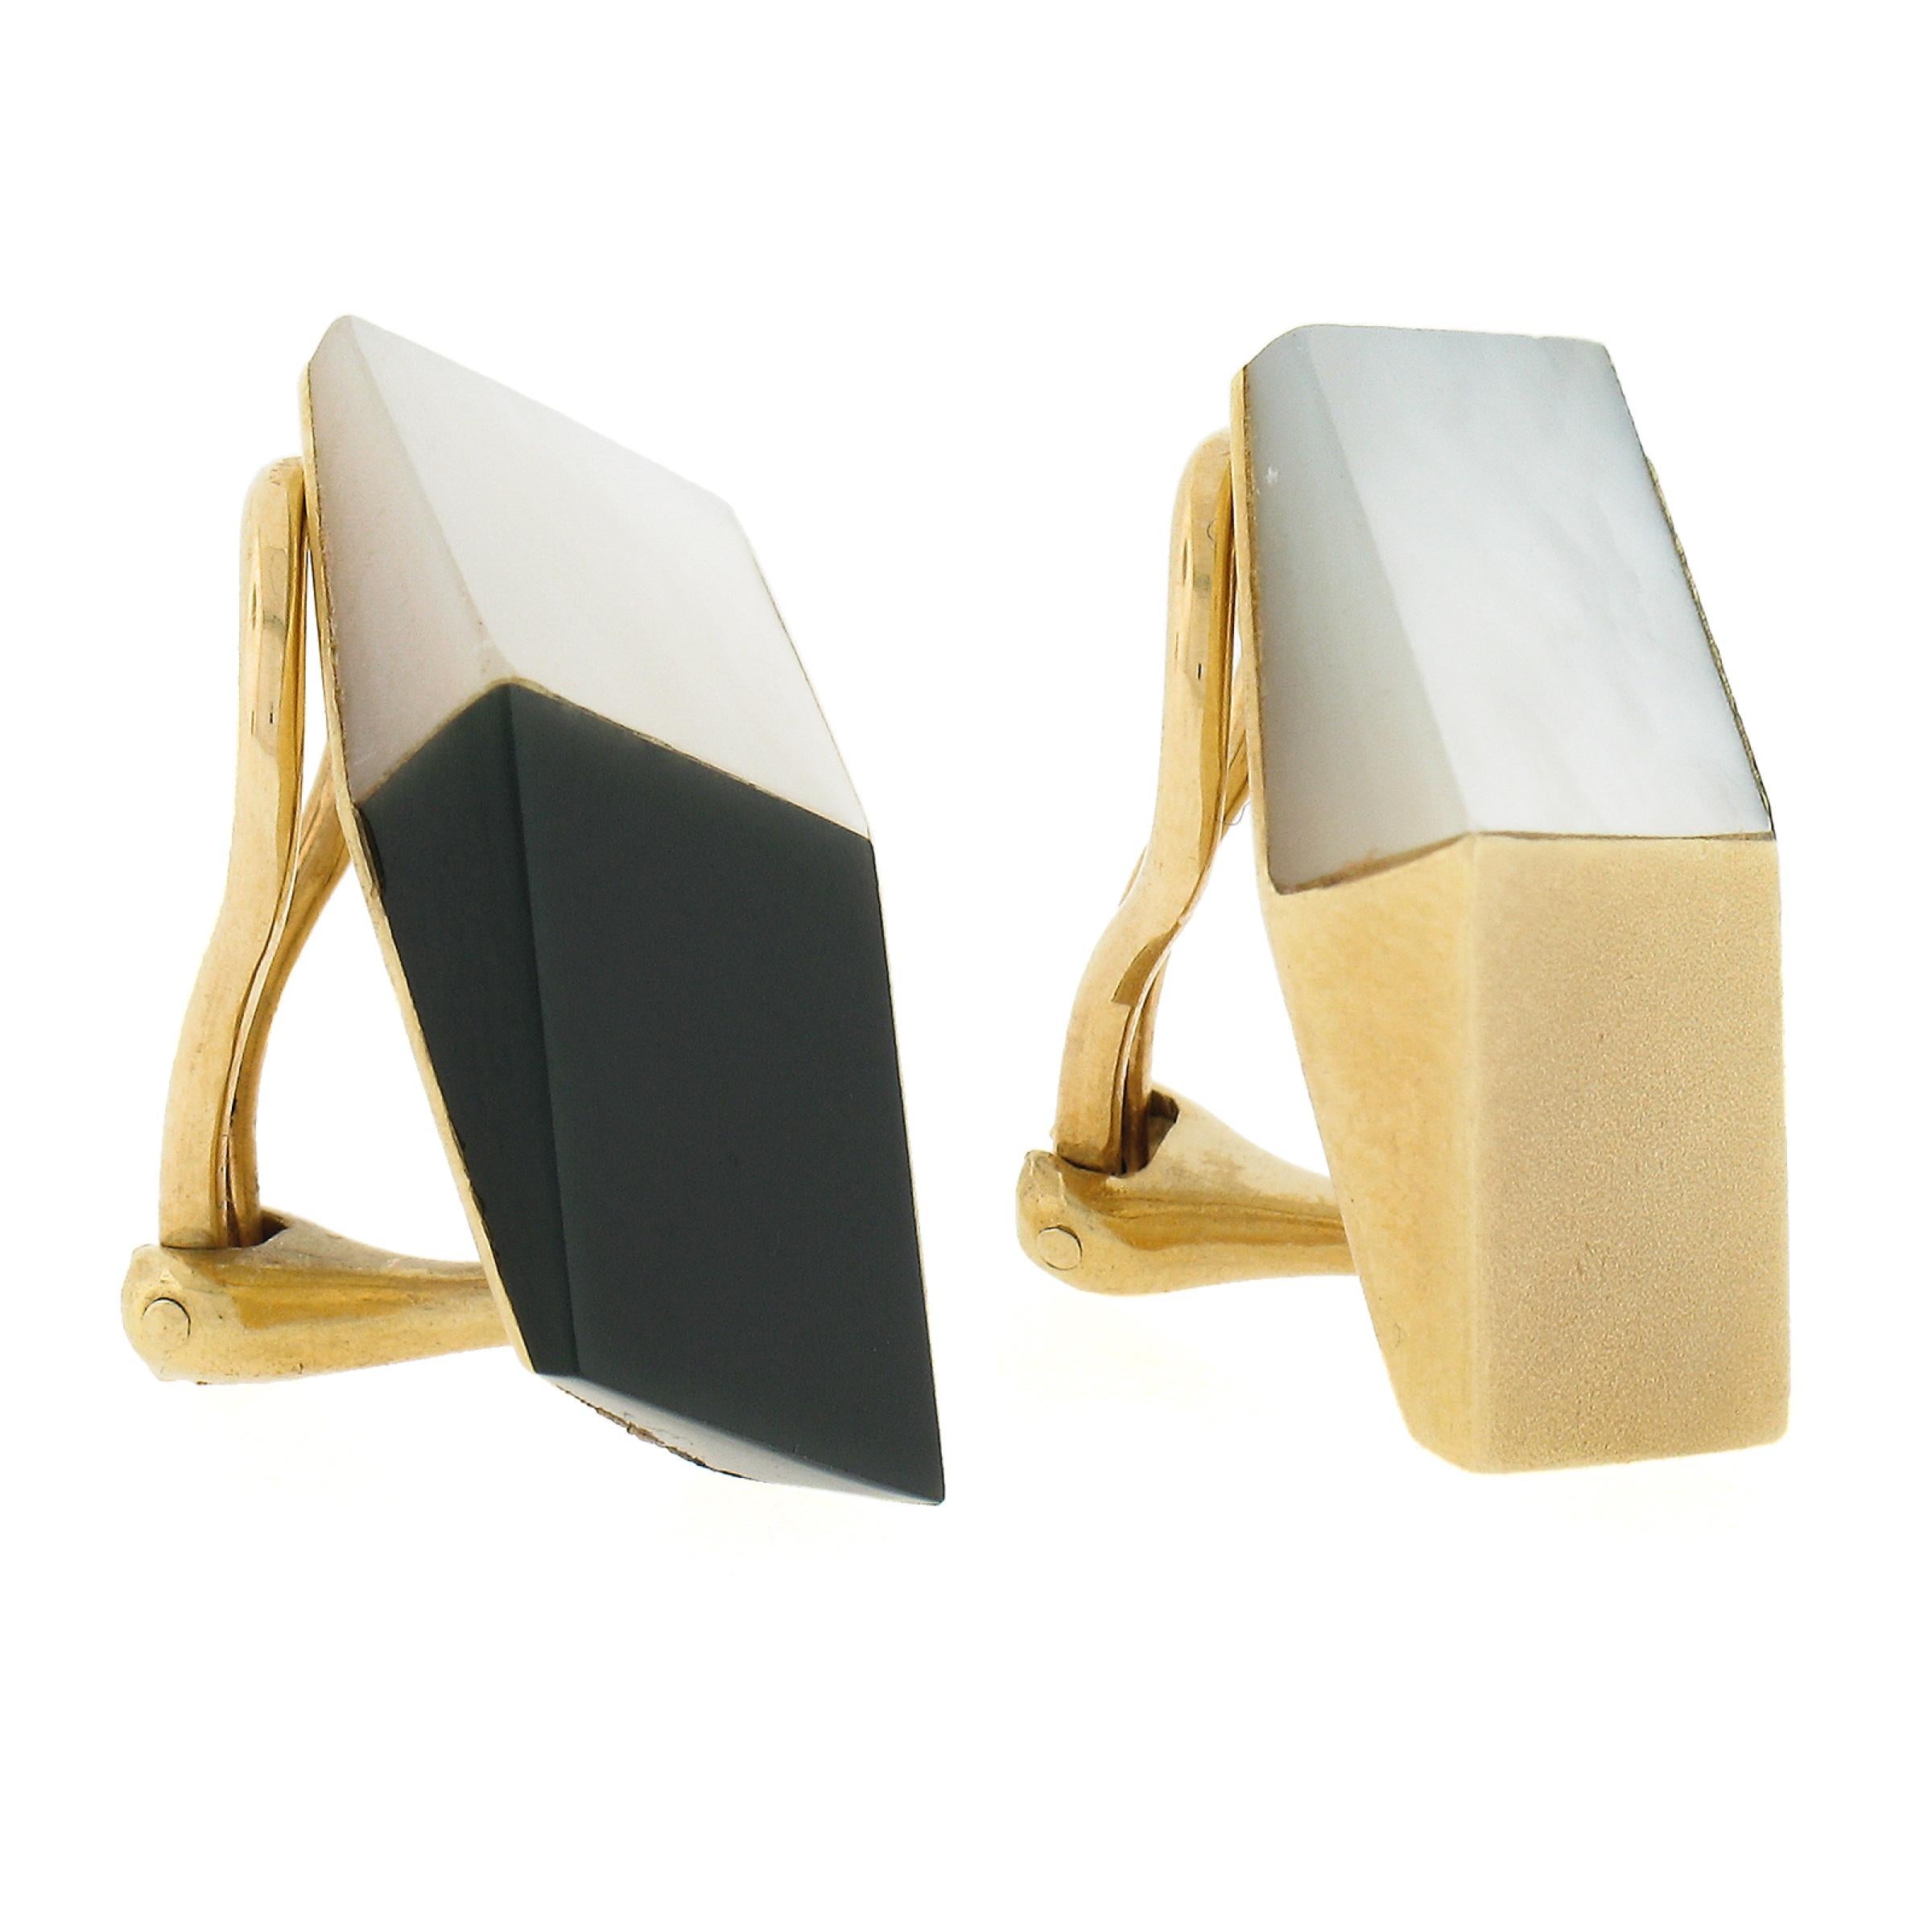 Uncut Angela Cumming 18k Gold Inlaid Black Onyx & Mother of Pearl 3D Cube Earrings